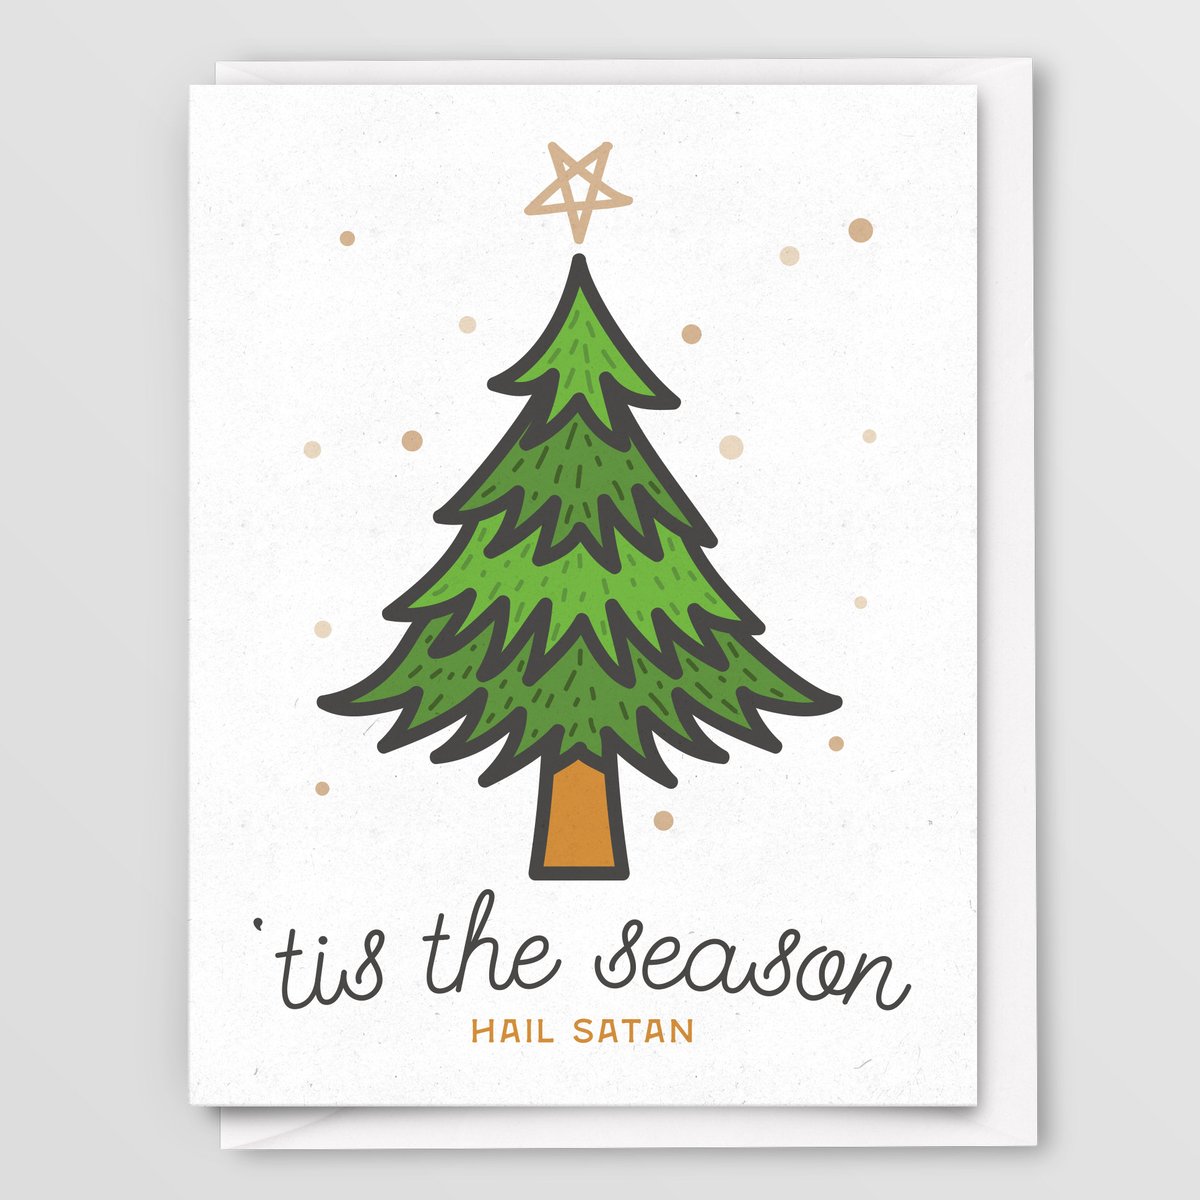 'tis the Season - Hail Satan (Greeting Card)